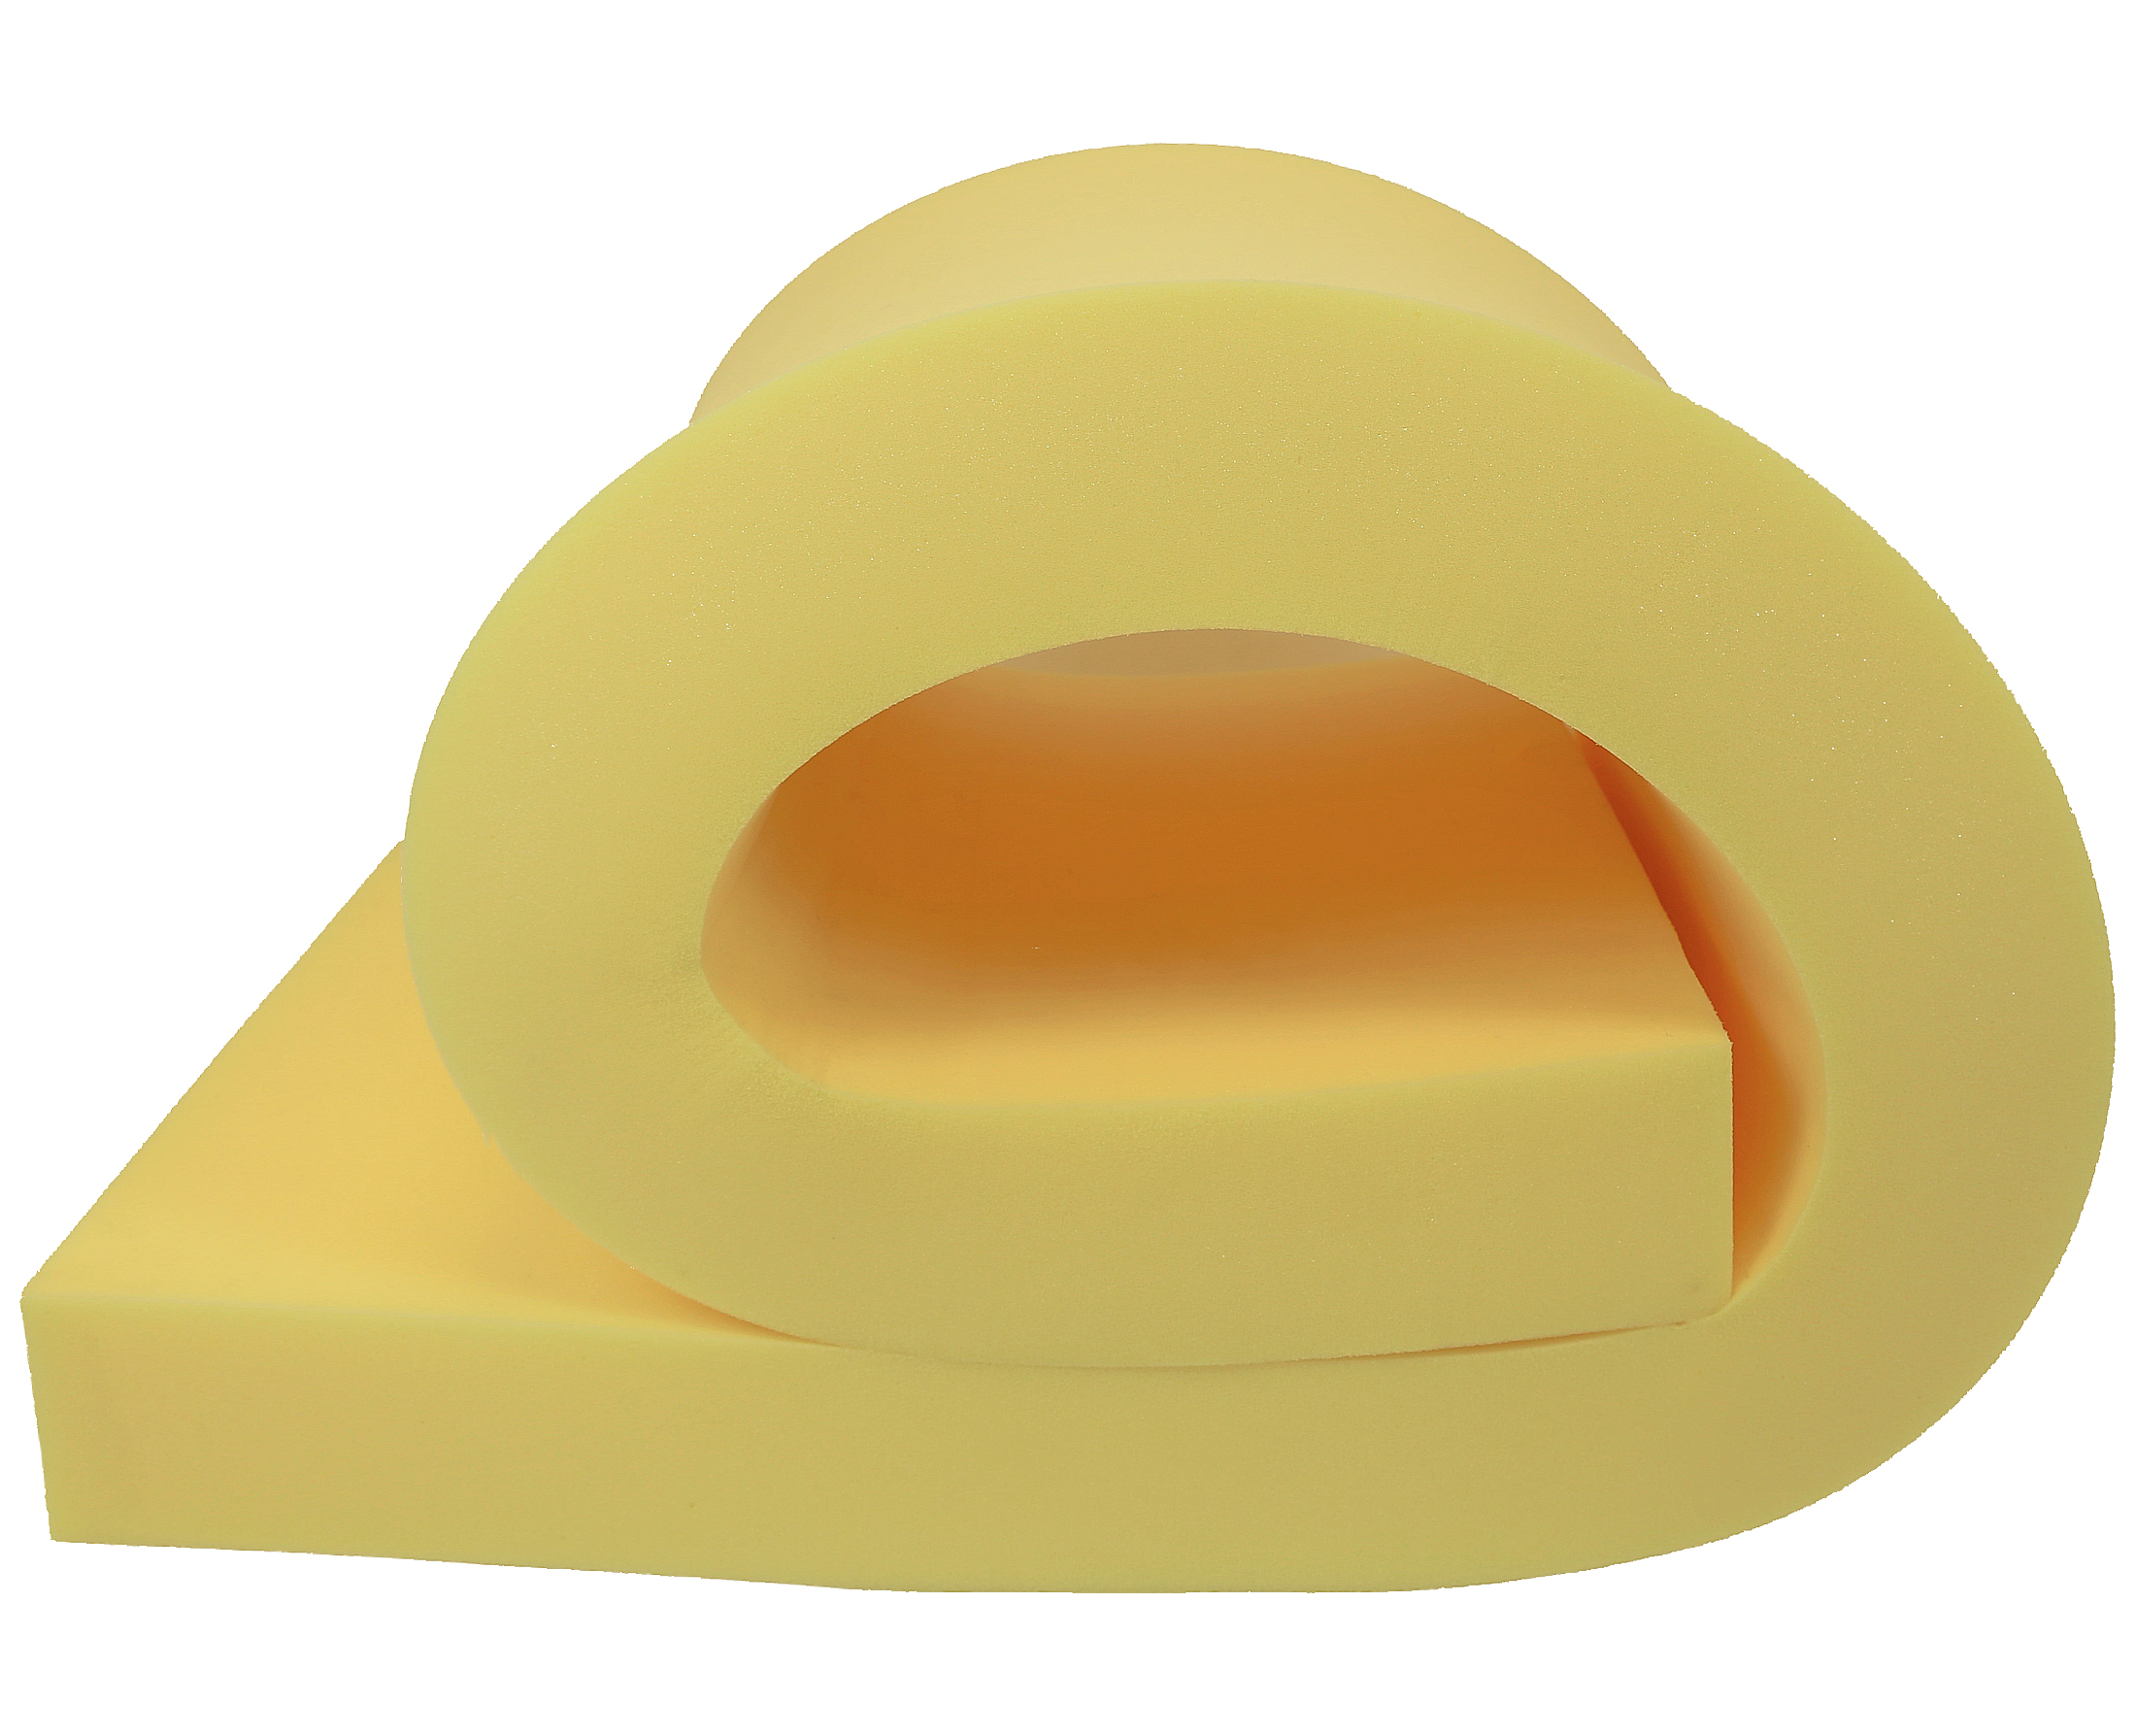 HR Foam (High Resiliency) Upholstery Foam Cushion – Precision Ray